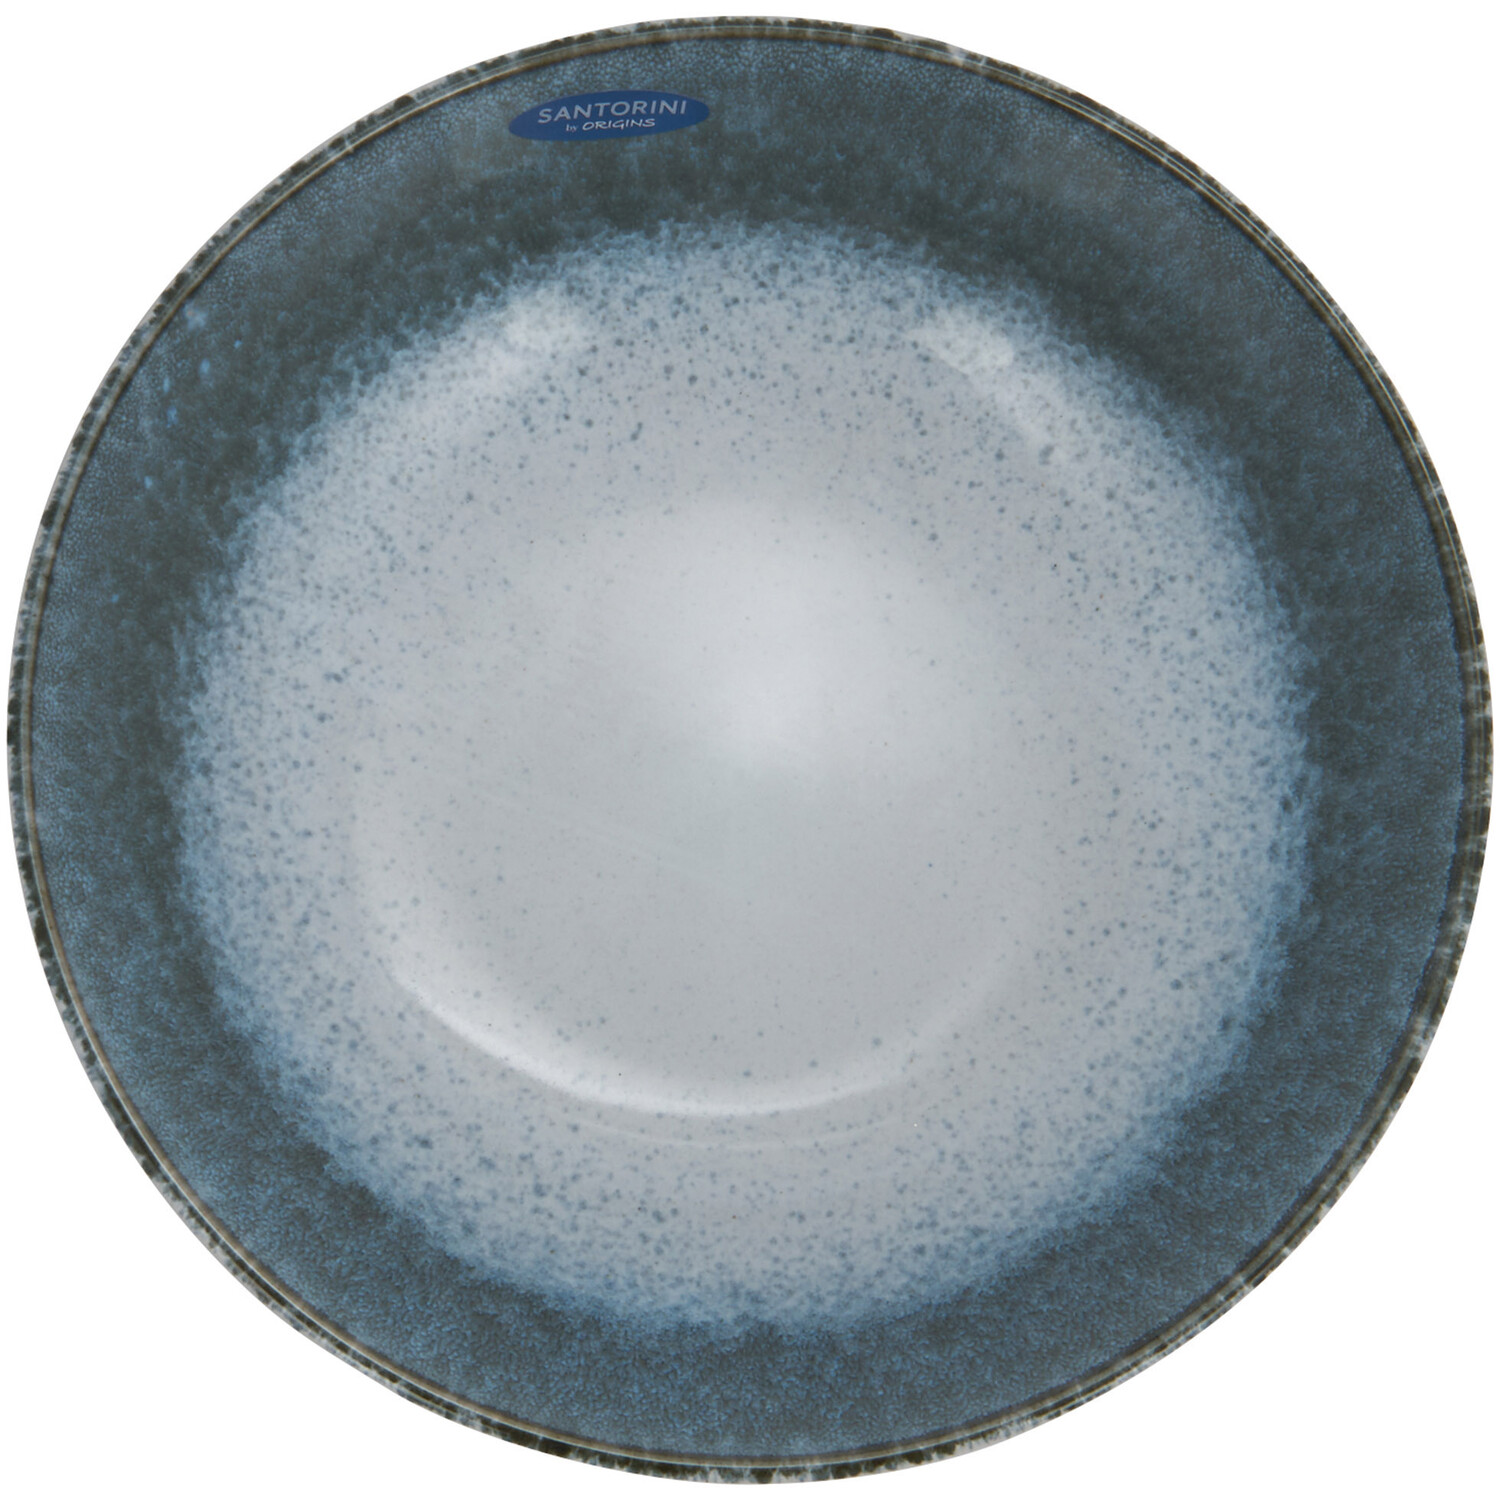 Santorini Reactive Glaze Serving Bowl - Blue Image 4